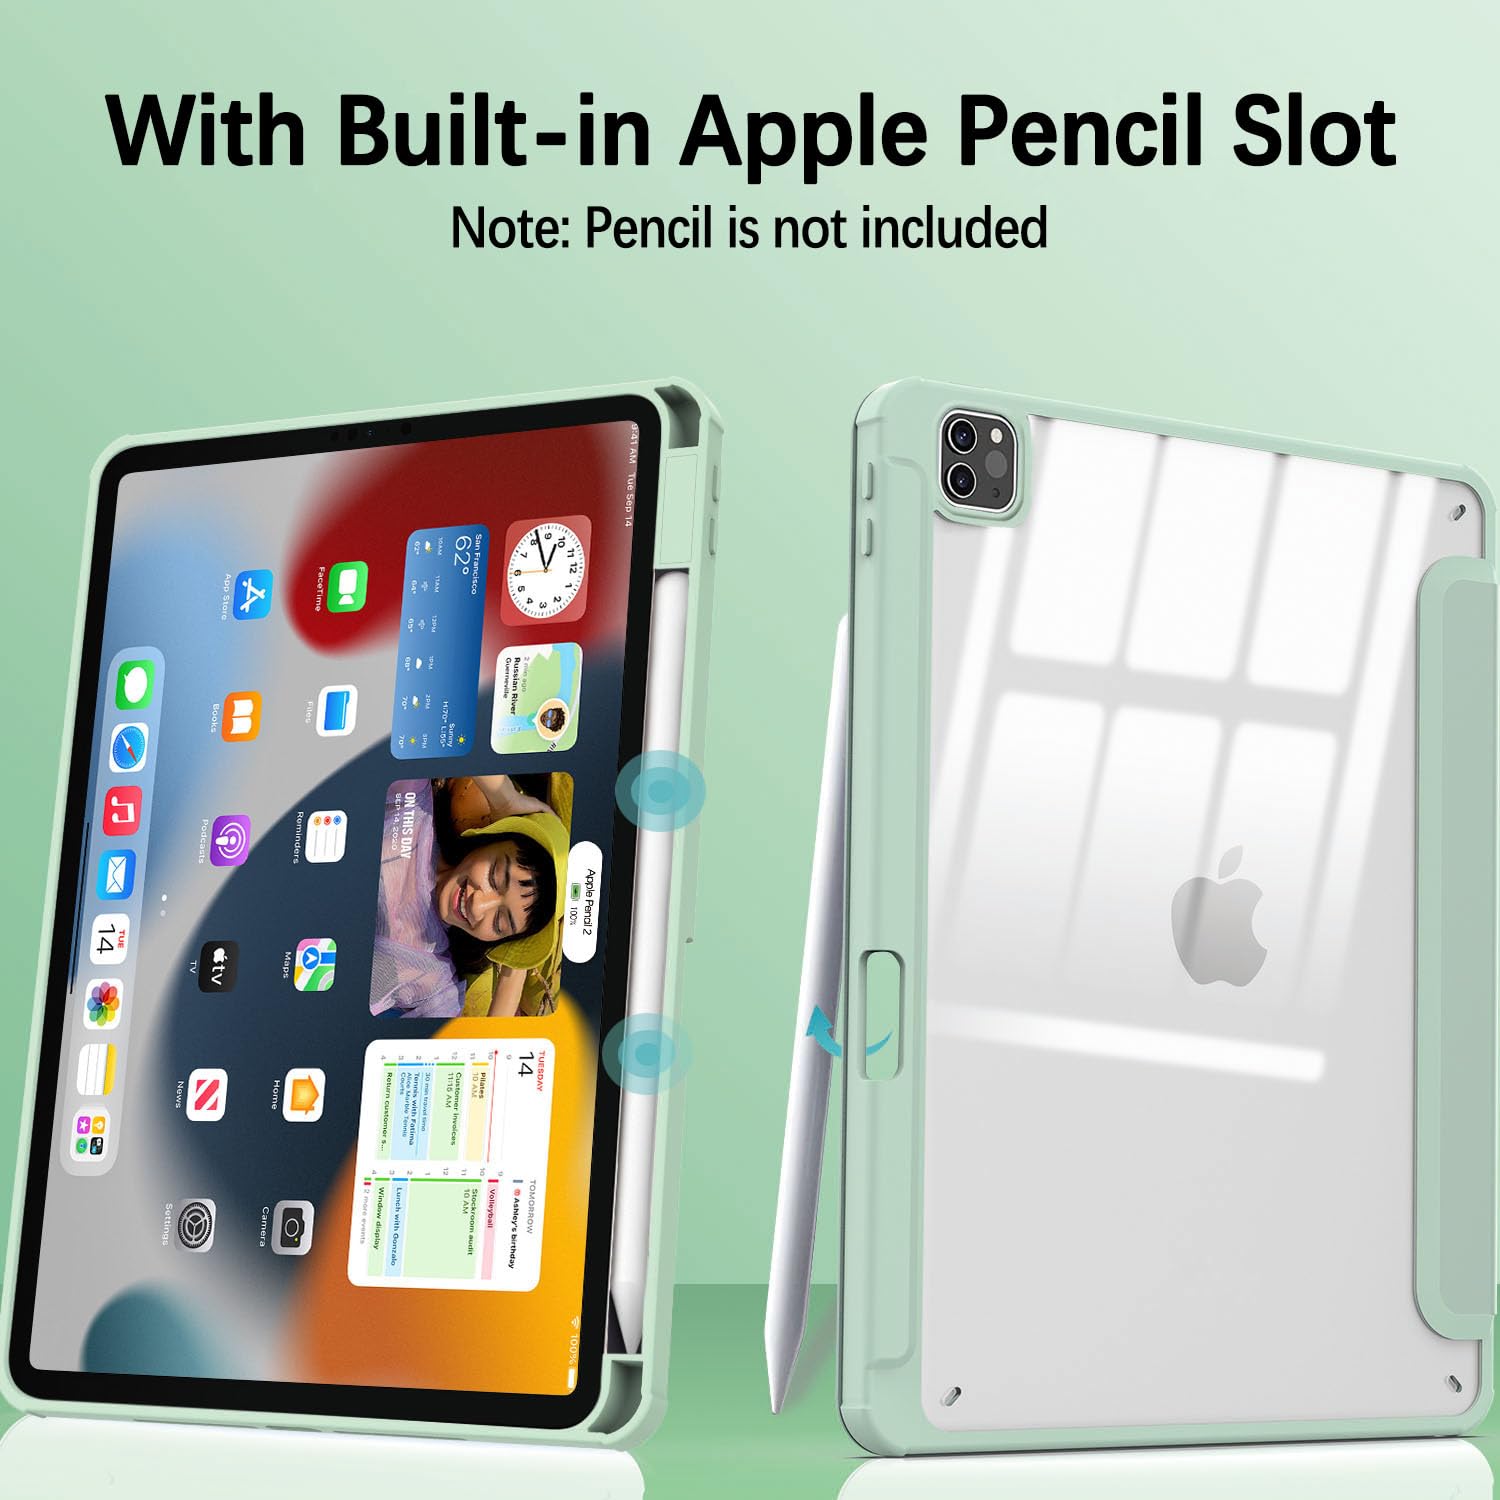 iPad Pro 11 Inch 2020-2022 Soft Tpu Smart Premium Case Auto Sleep Wake Stand Clear Cover Pencil holder Green